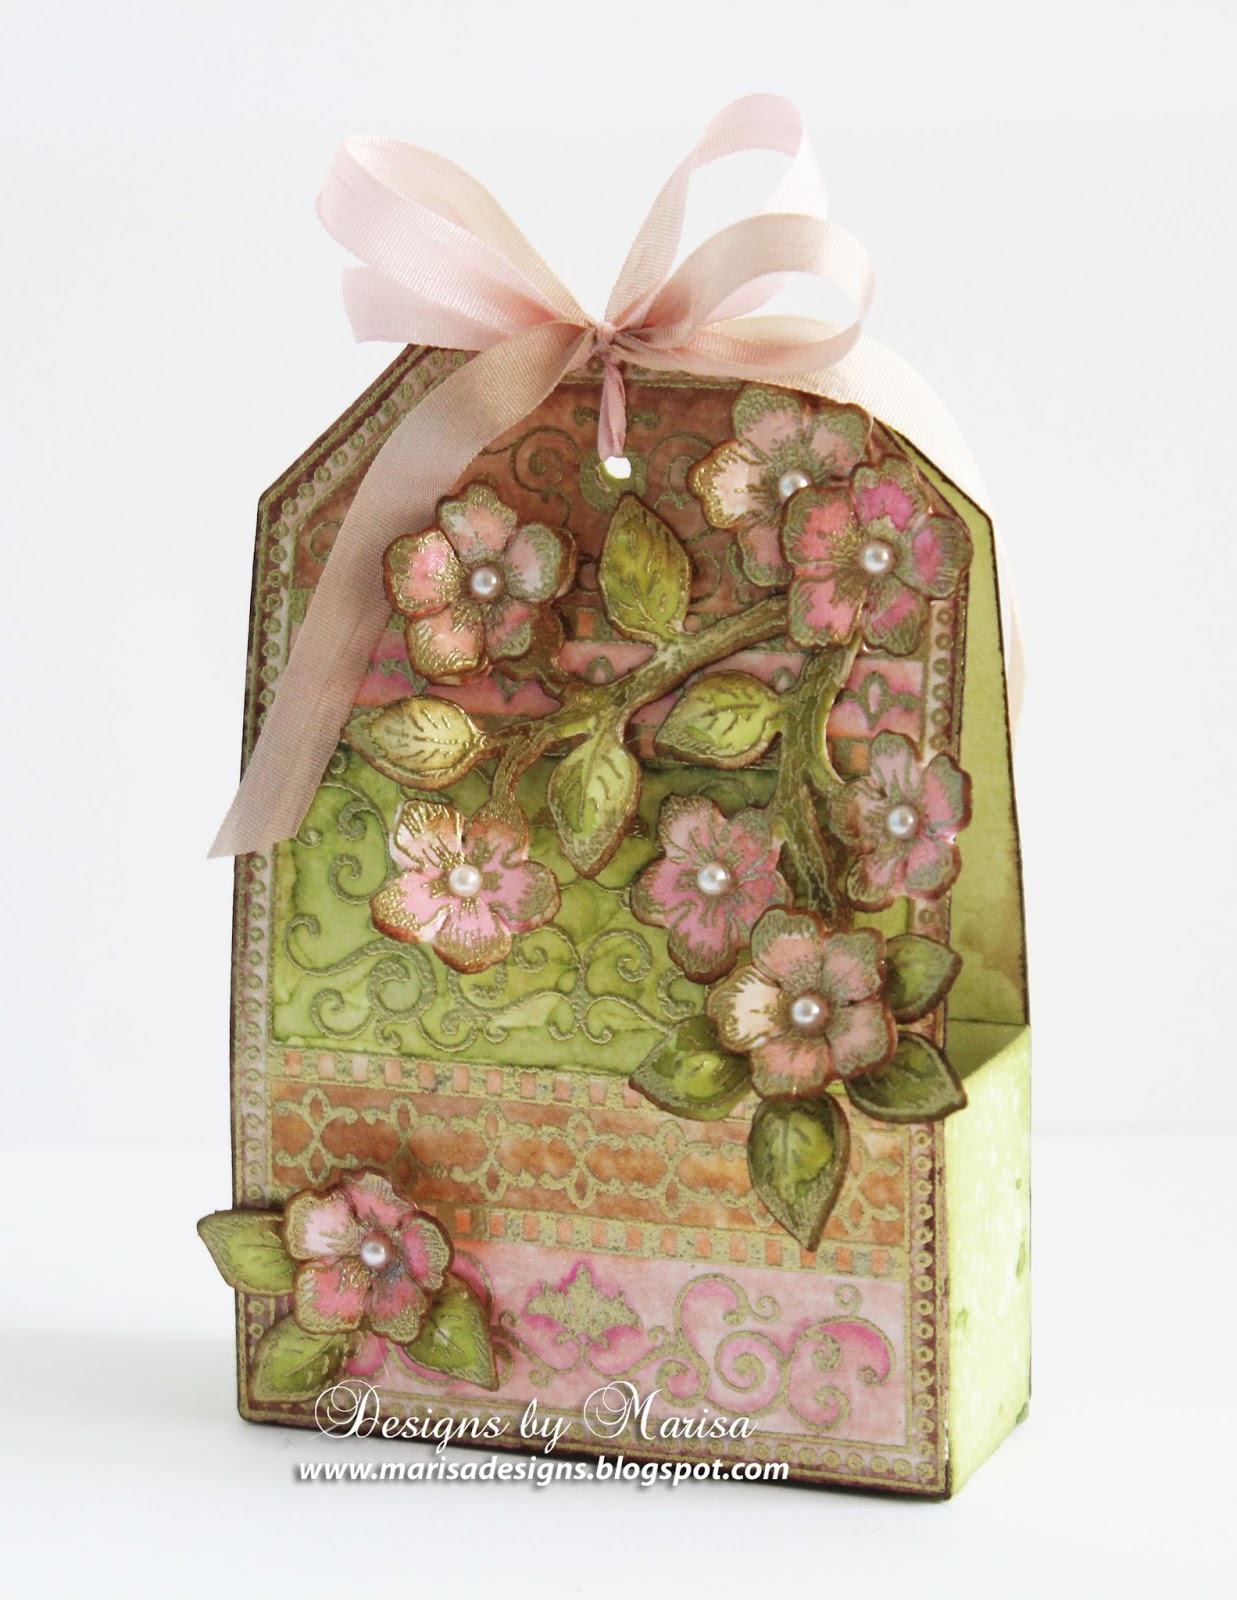 Designs by Marisa: Heartfelt Creations - Flower Gift Box